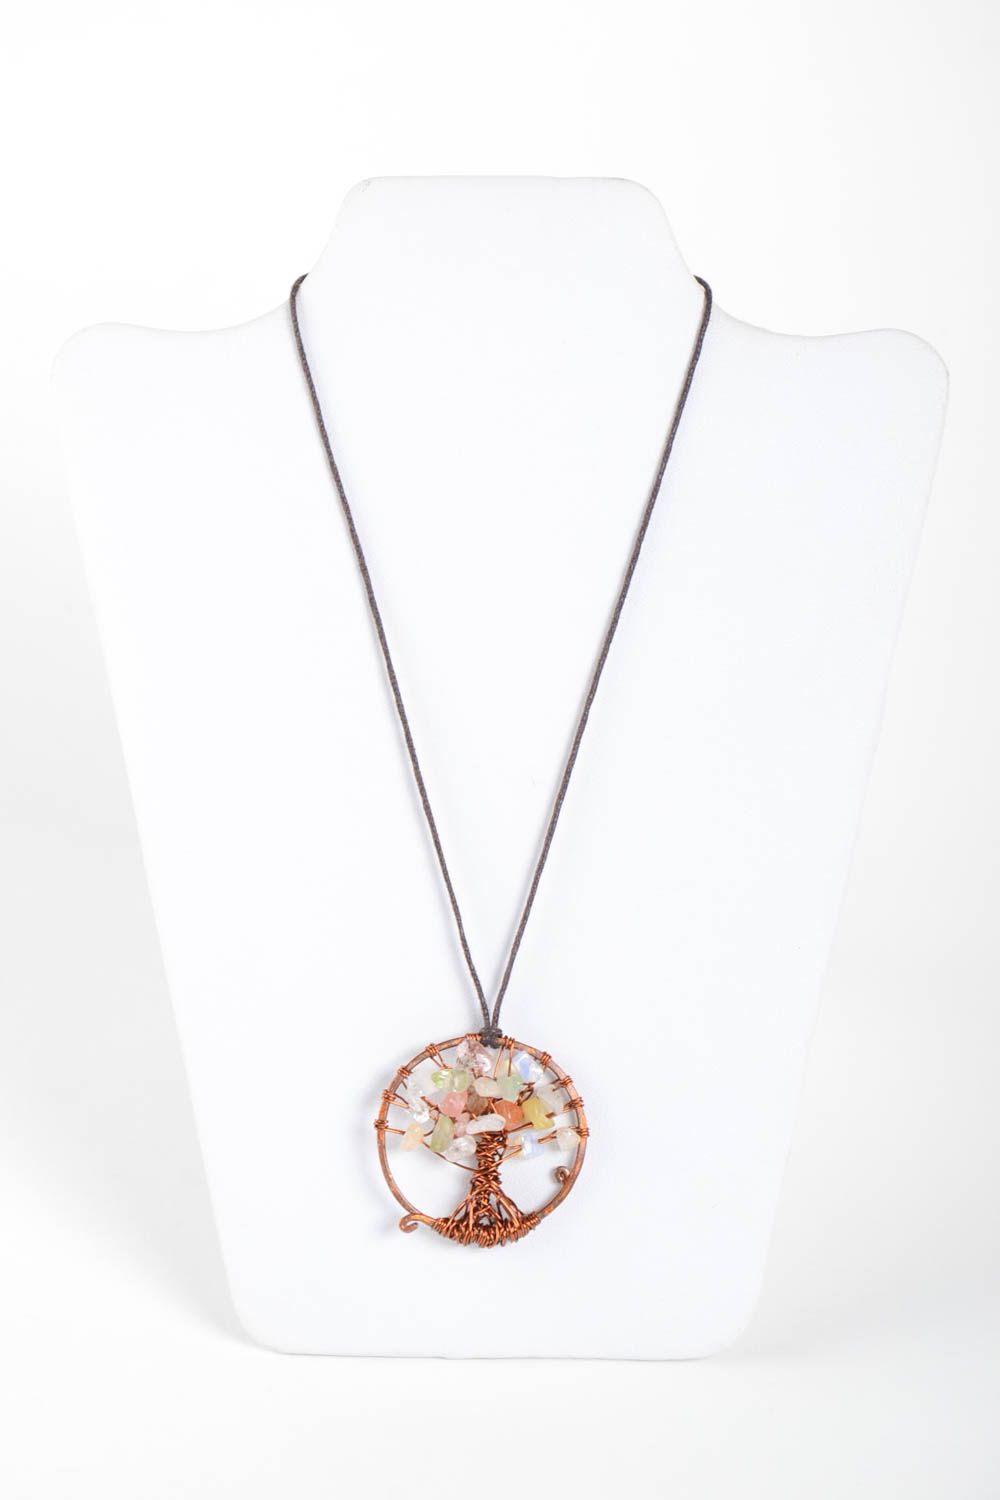 Handmade pendant designer accessory copper jewelry pendant with natural stones photo 2